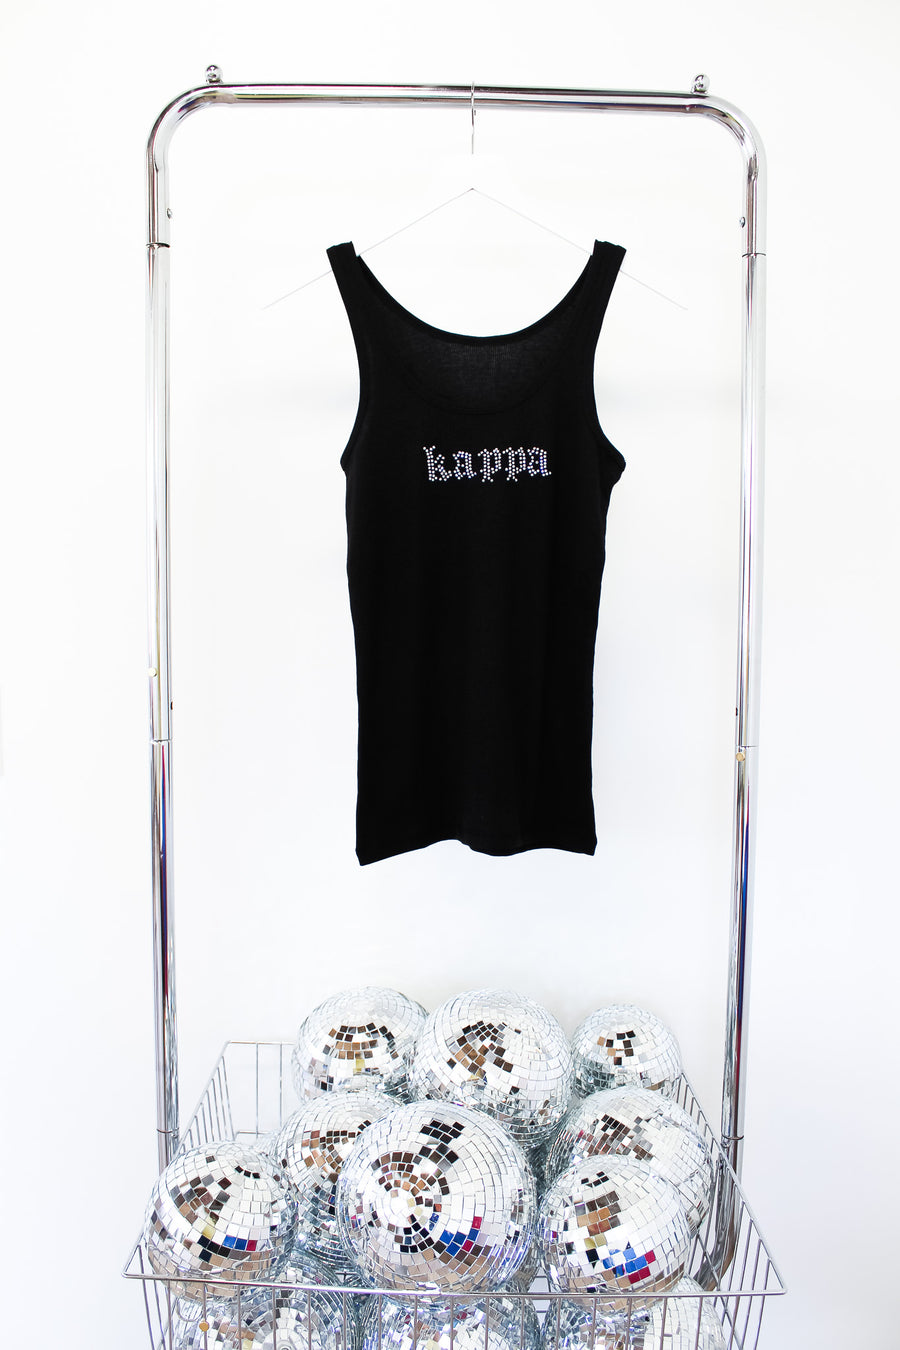 Kappa Kappa Gamma Bling Ring Tank - LG BLACK